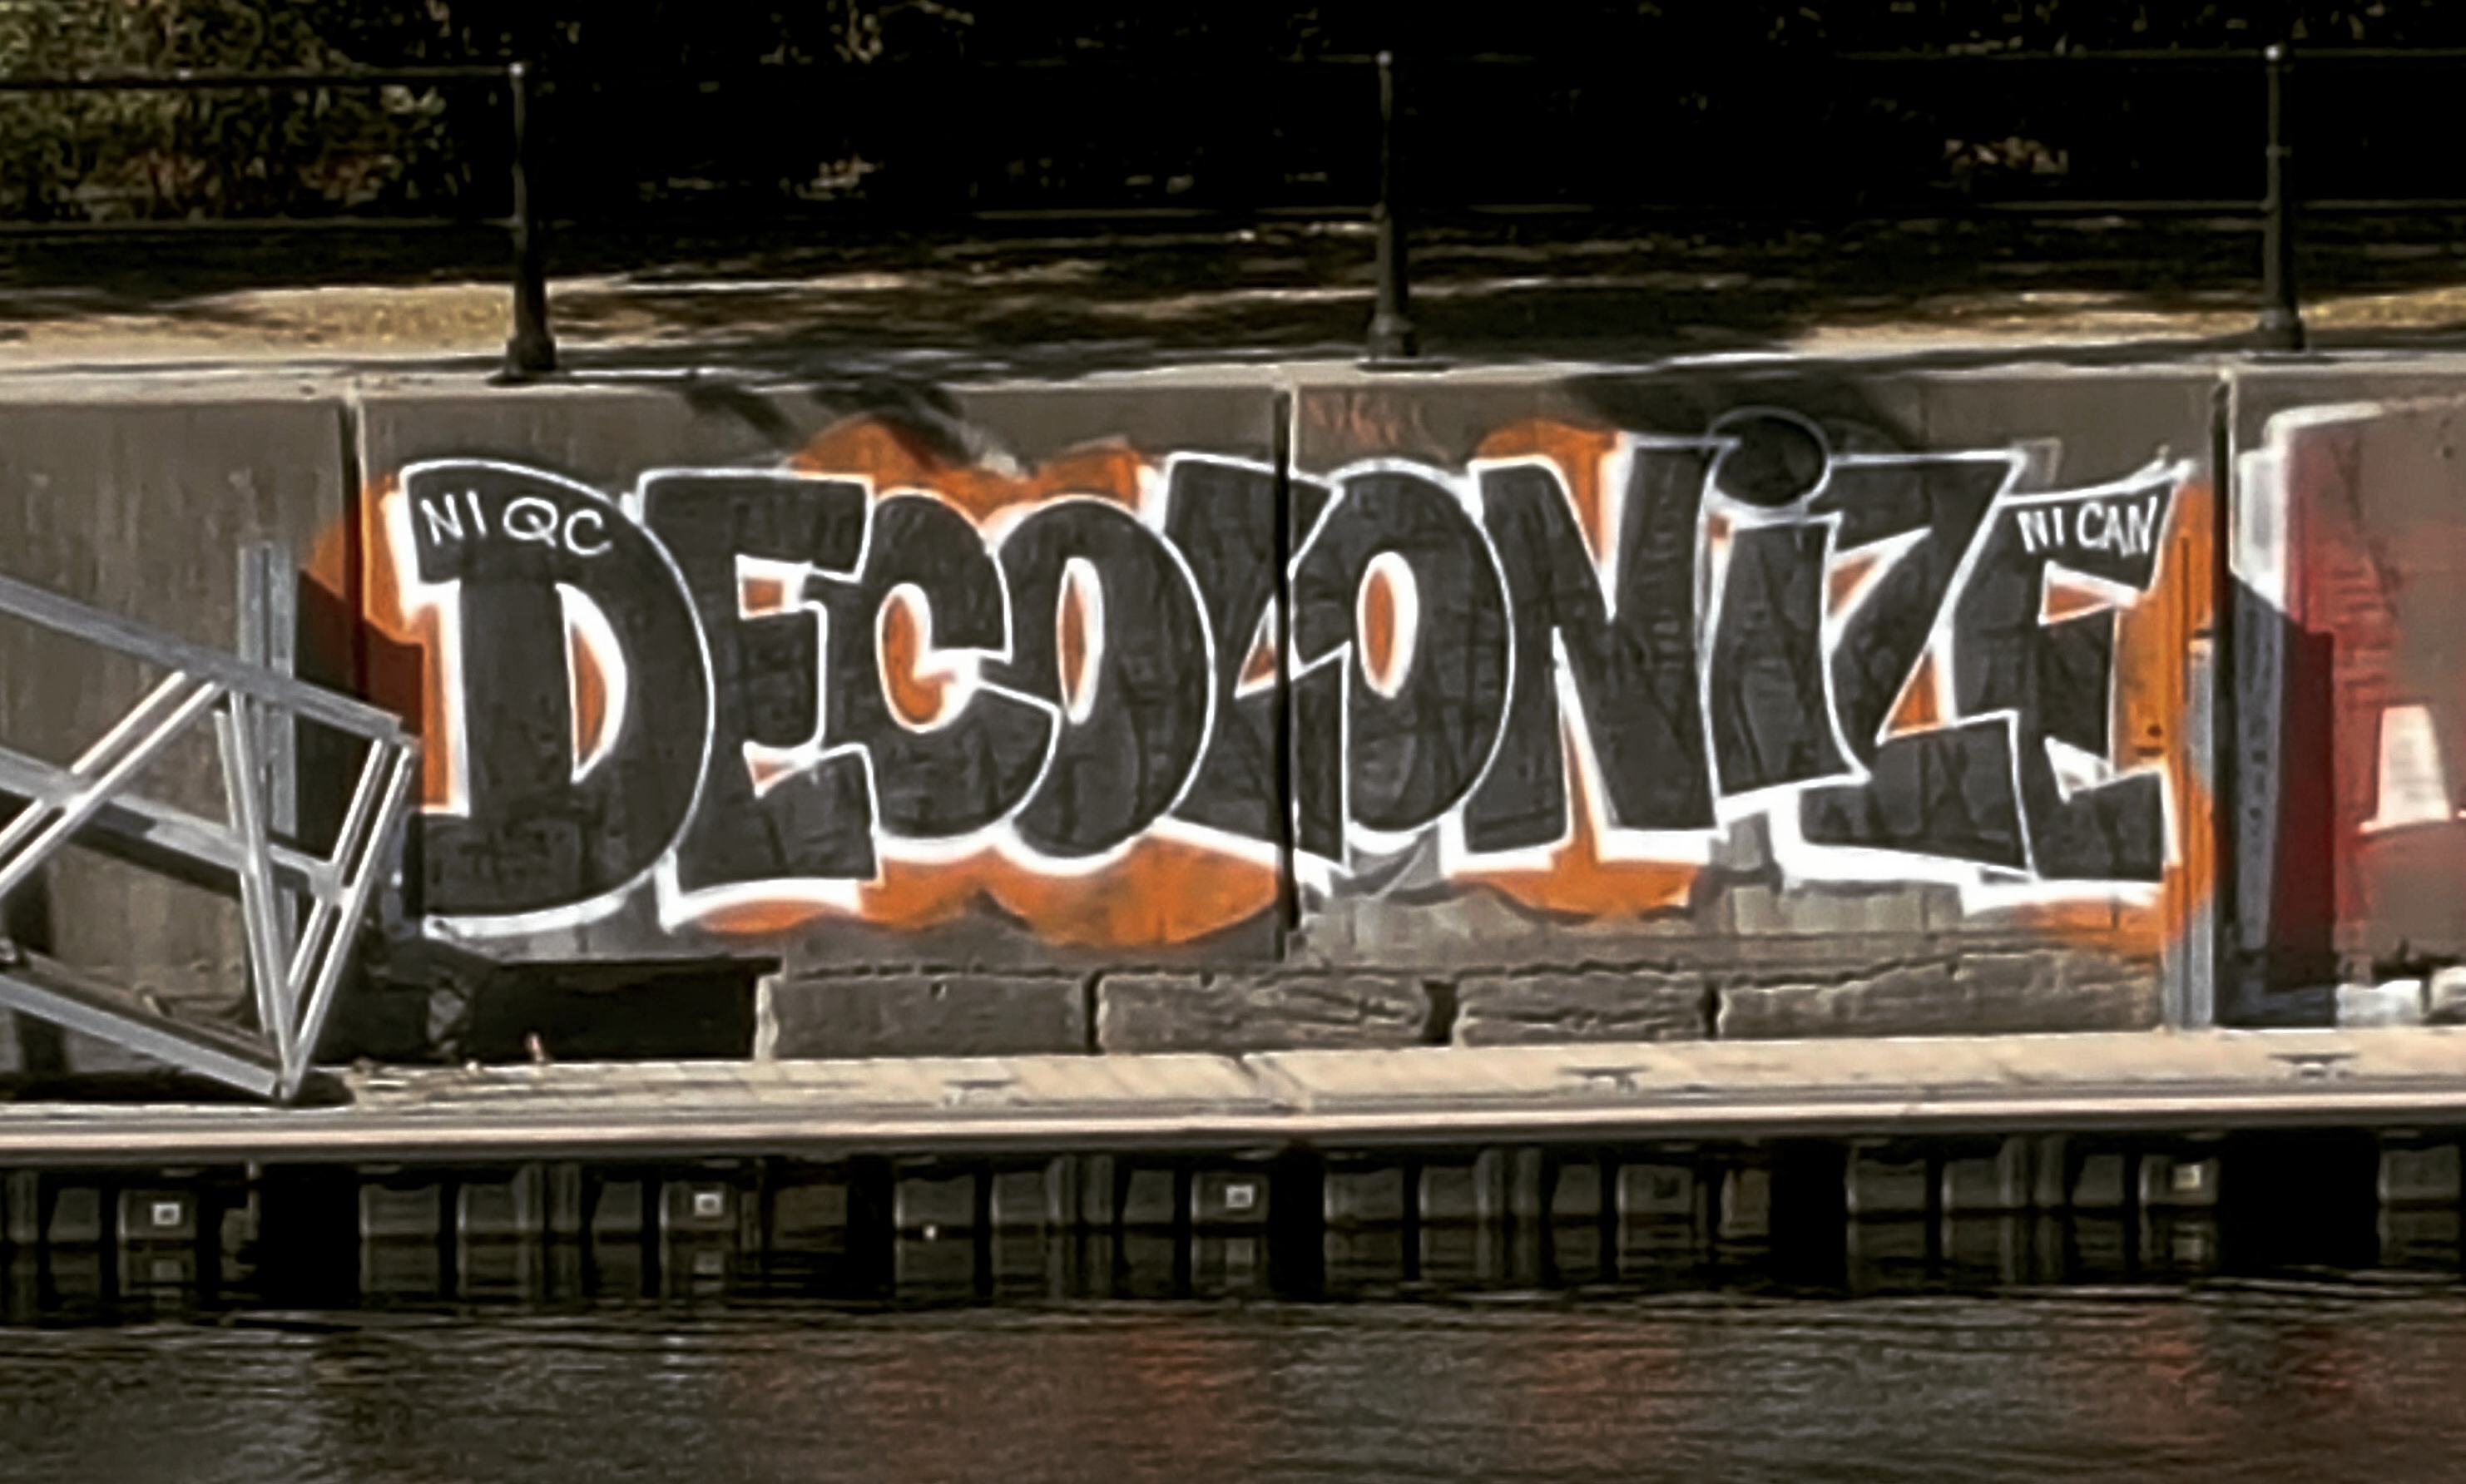 "Fascism is imperialist repression turned inward": Decolonize Graffiti